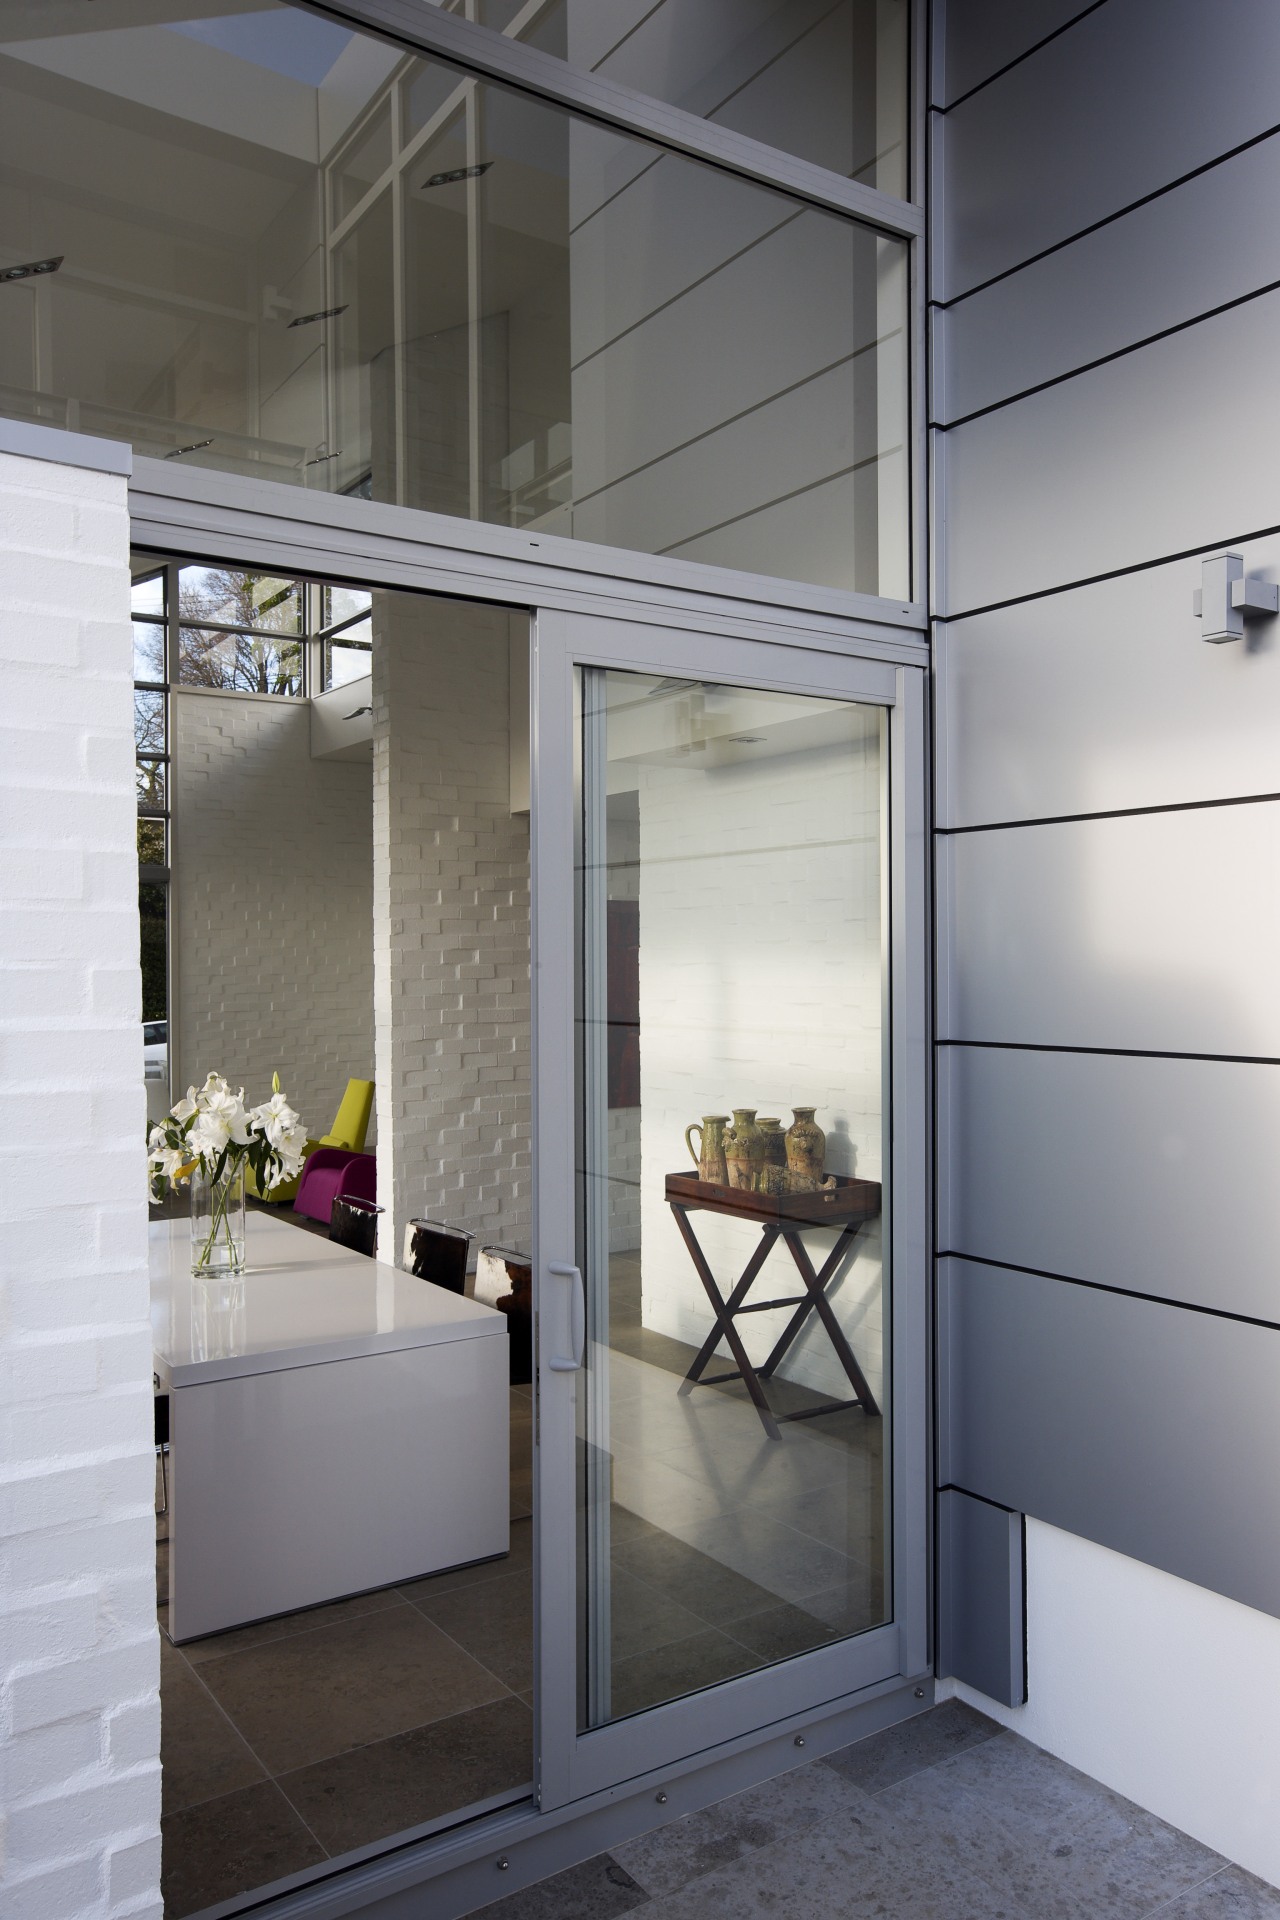 View of sliding doors from Able Aluminium. architecture, door, interior design, gray